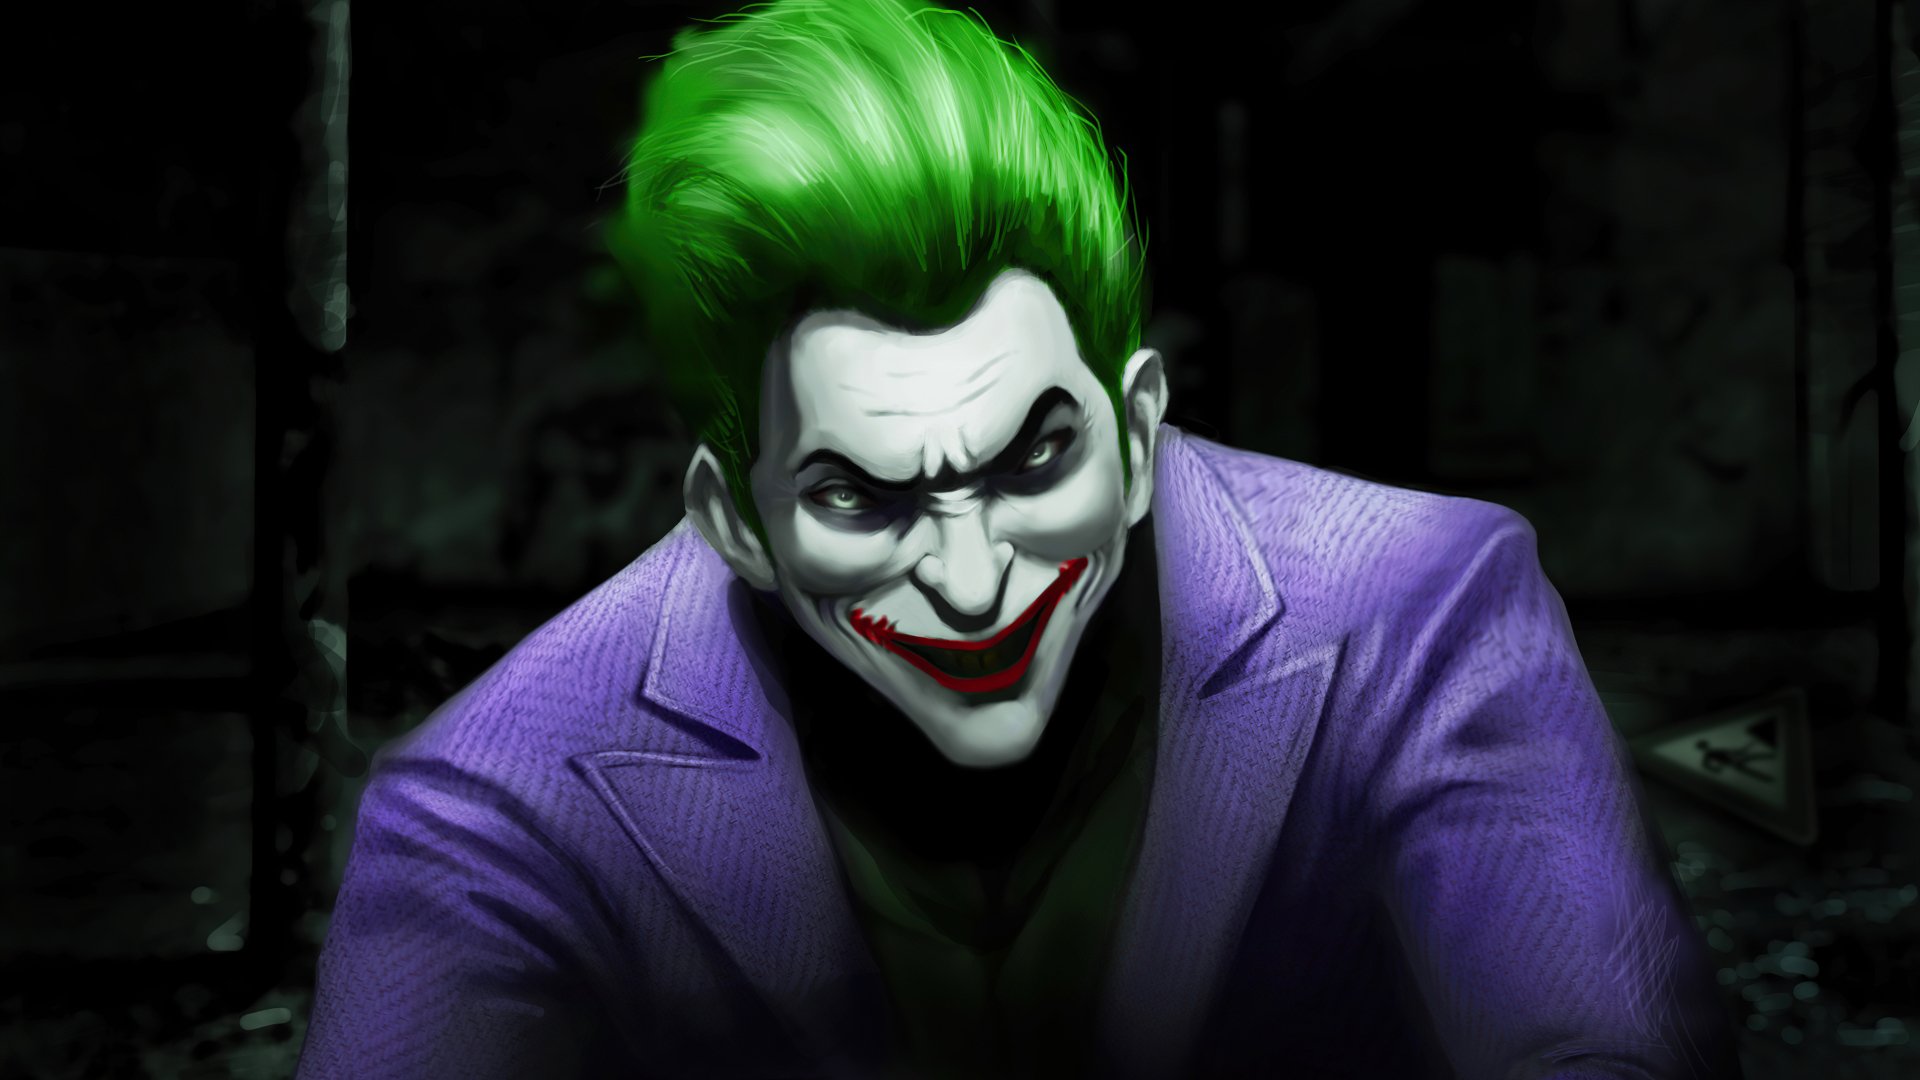 Download DC Comics Comic Joker 4k Ultra HD Wallpaper by Oddhouse Studio